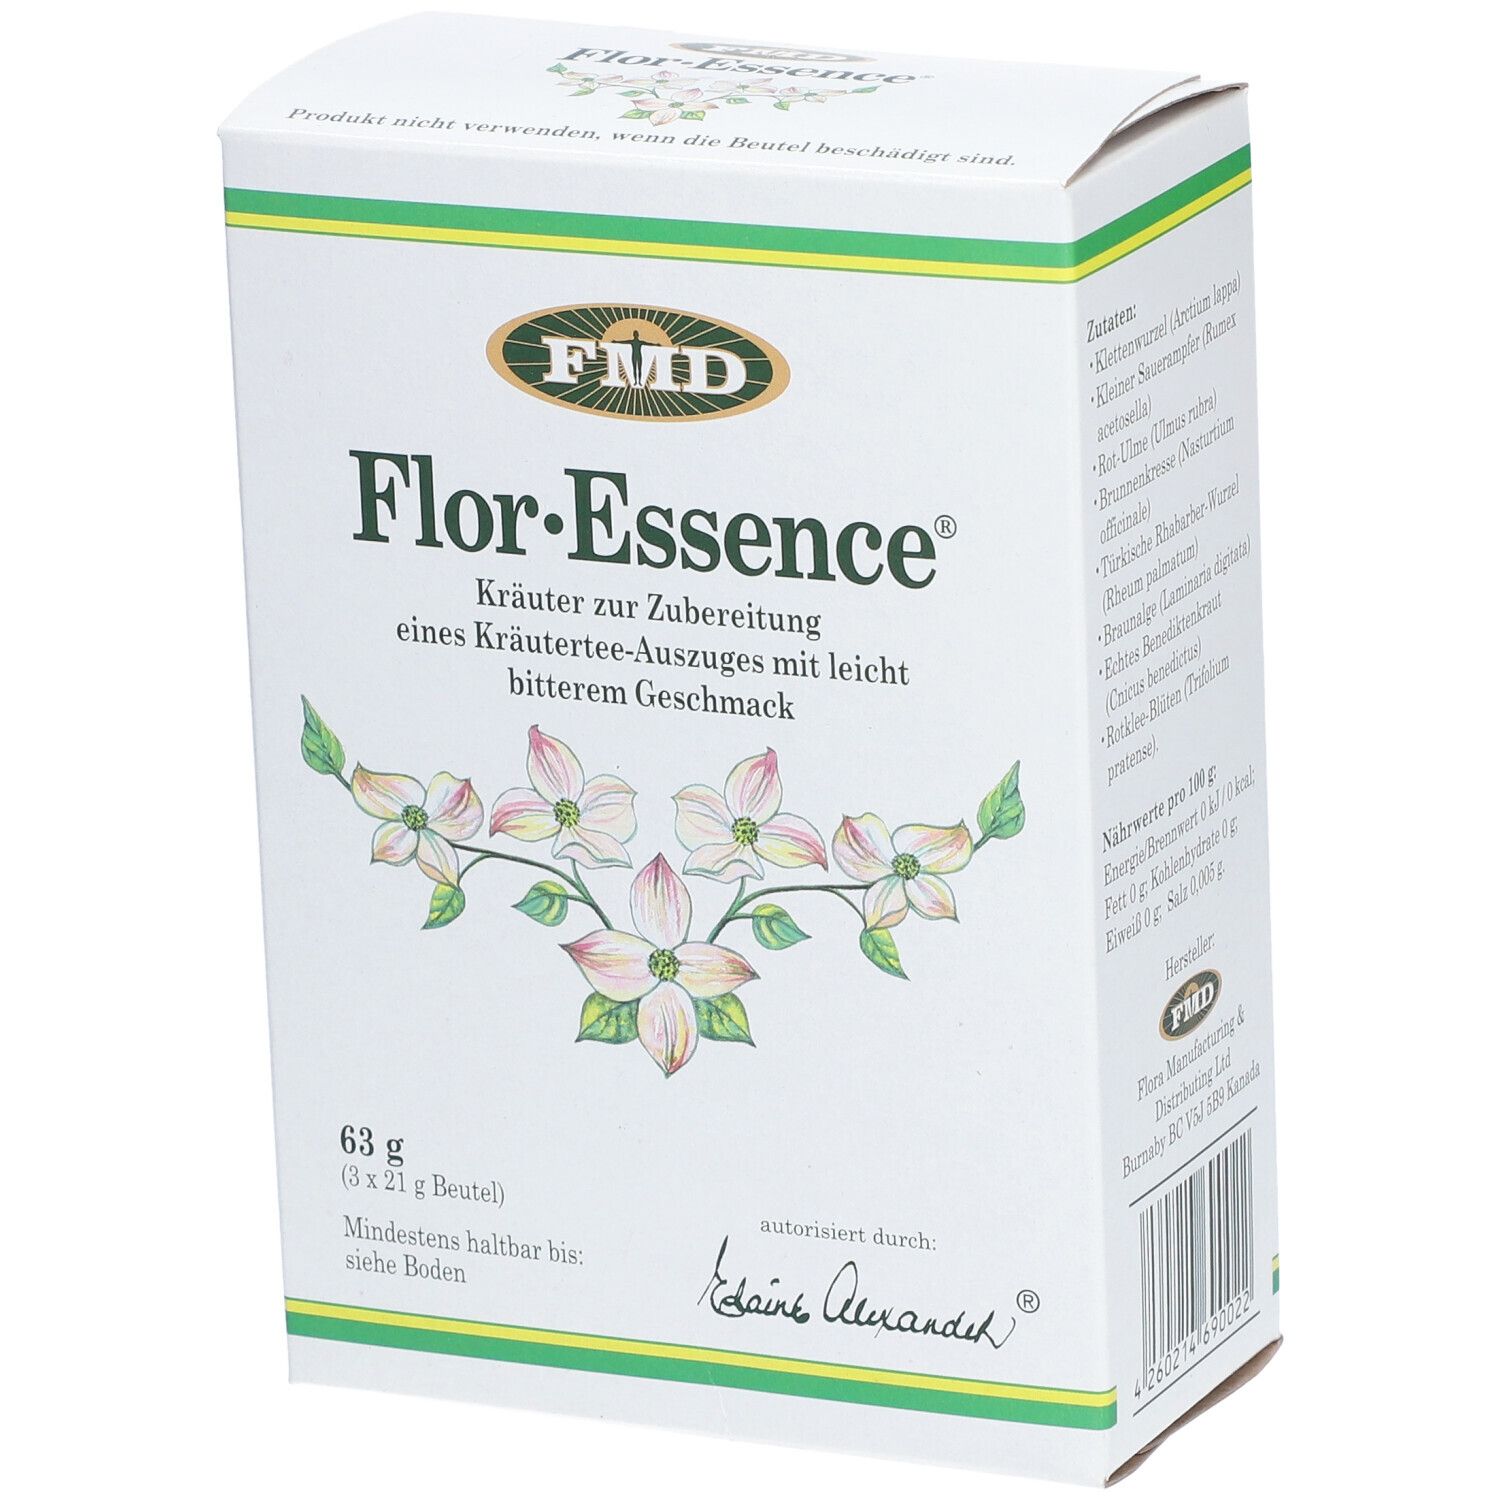 FMD Flor Essence® Kräuterteemischung